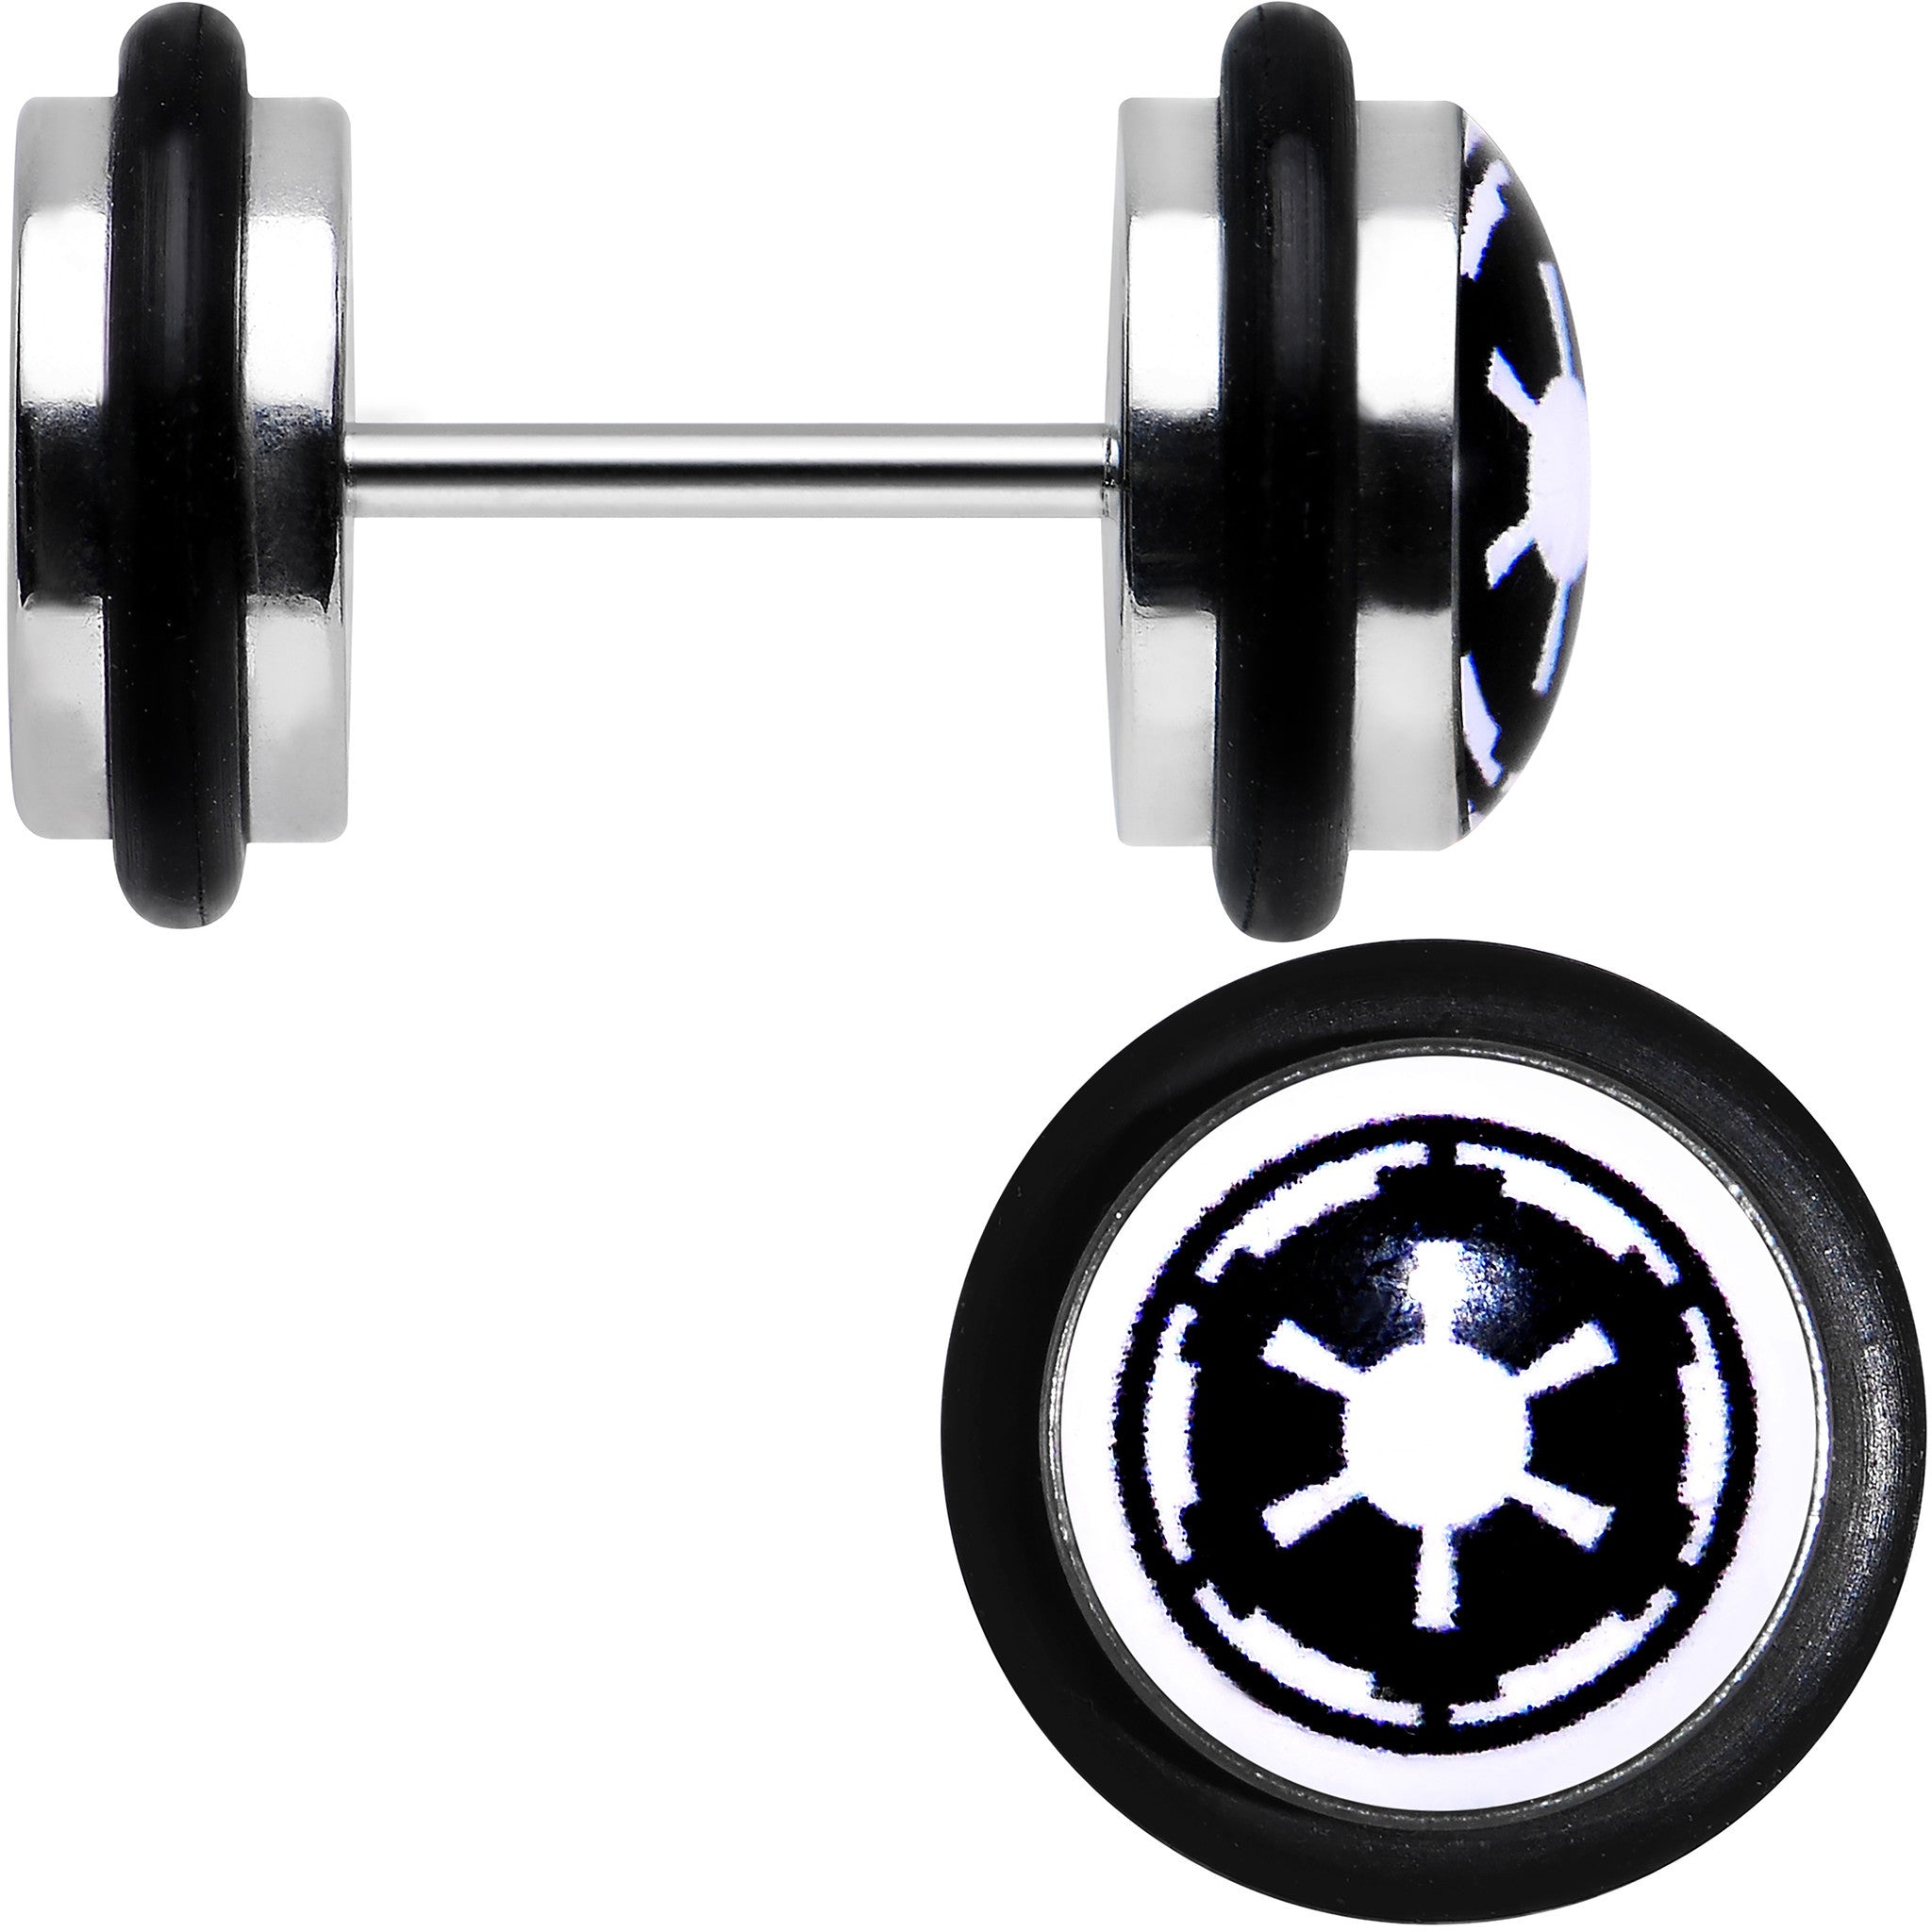 Licensed Star Wars Galactic Empire Symbol Cheater Plug Set